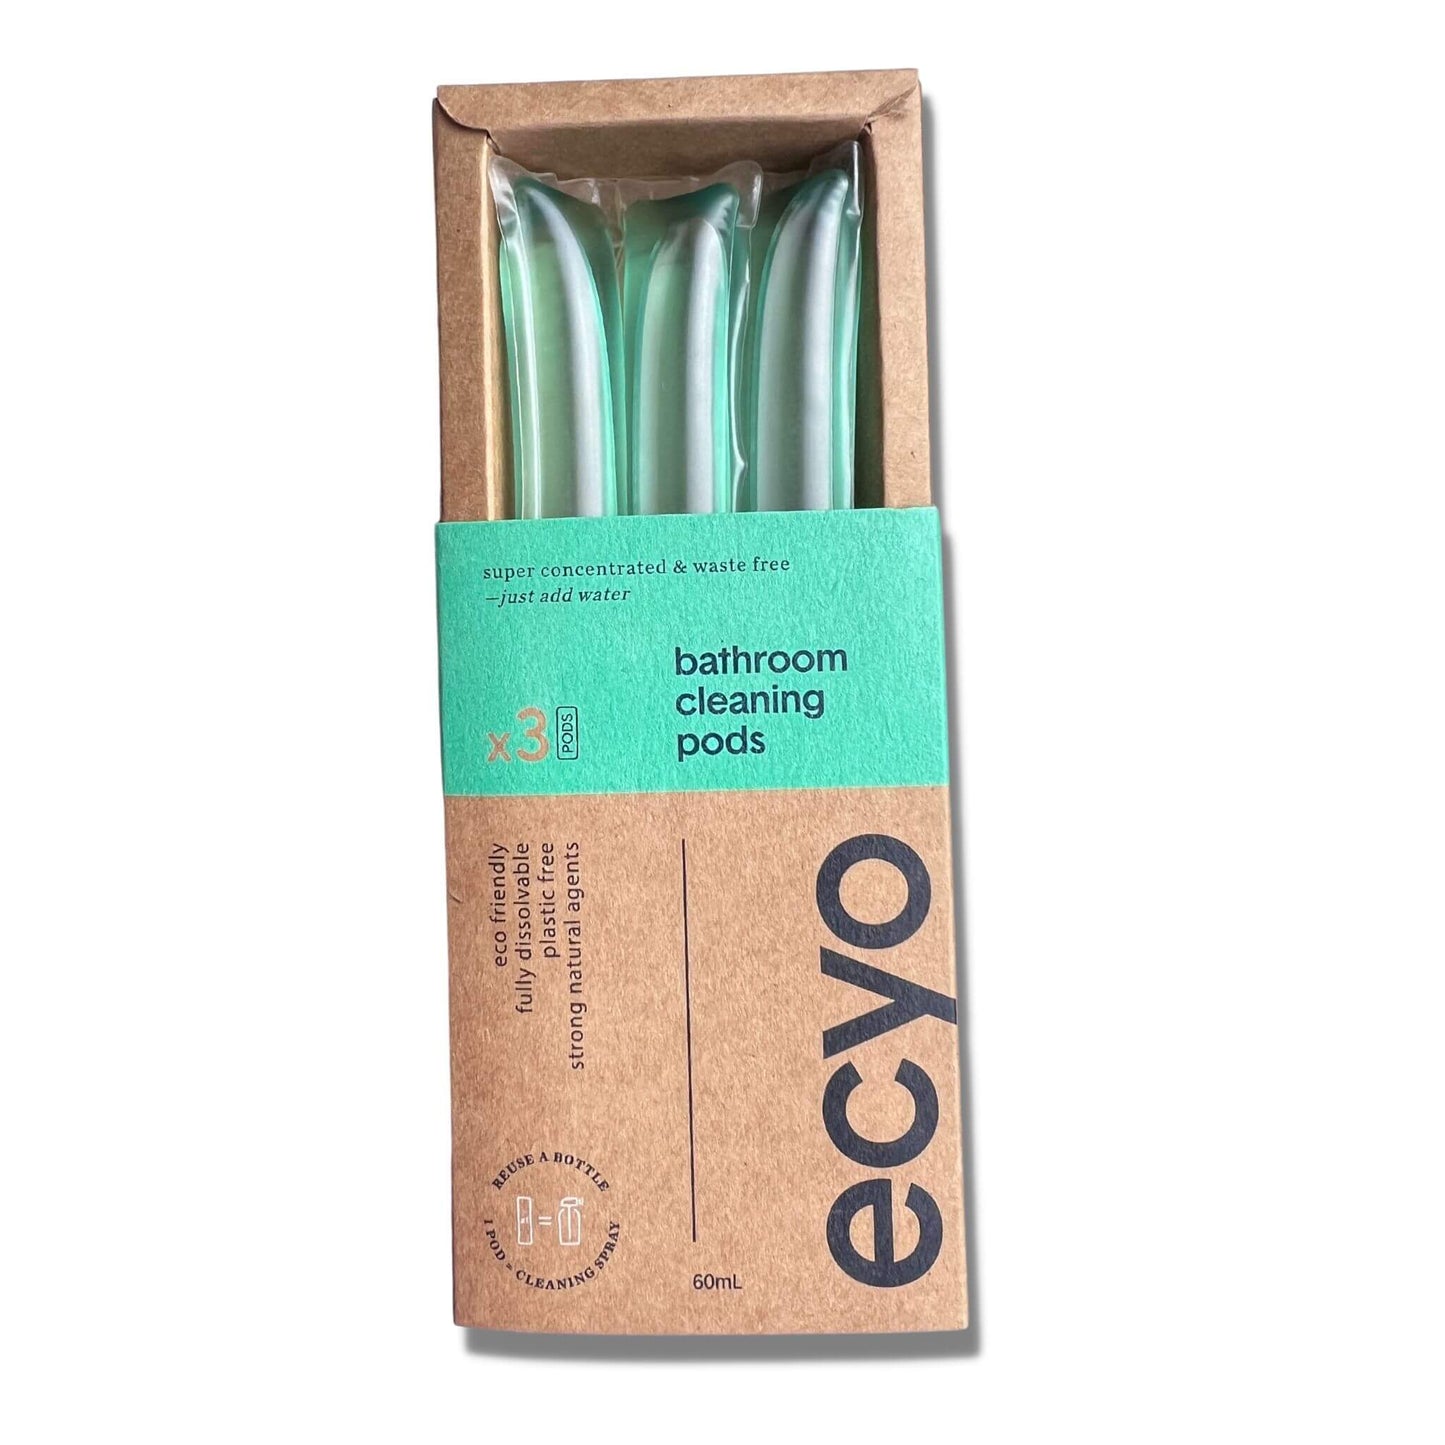 ecyo cleaning pods x 3 - bathroom open box